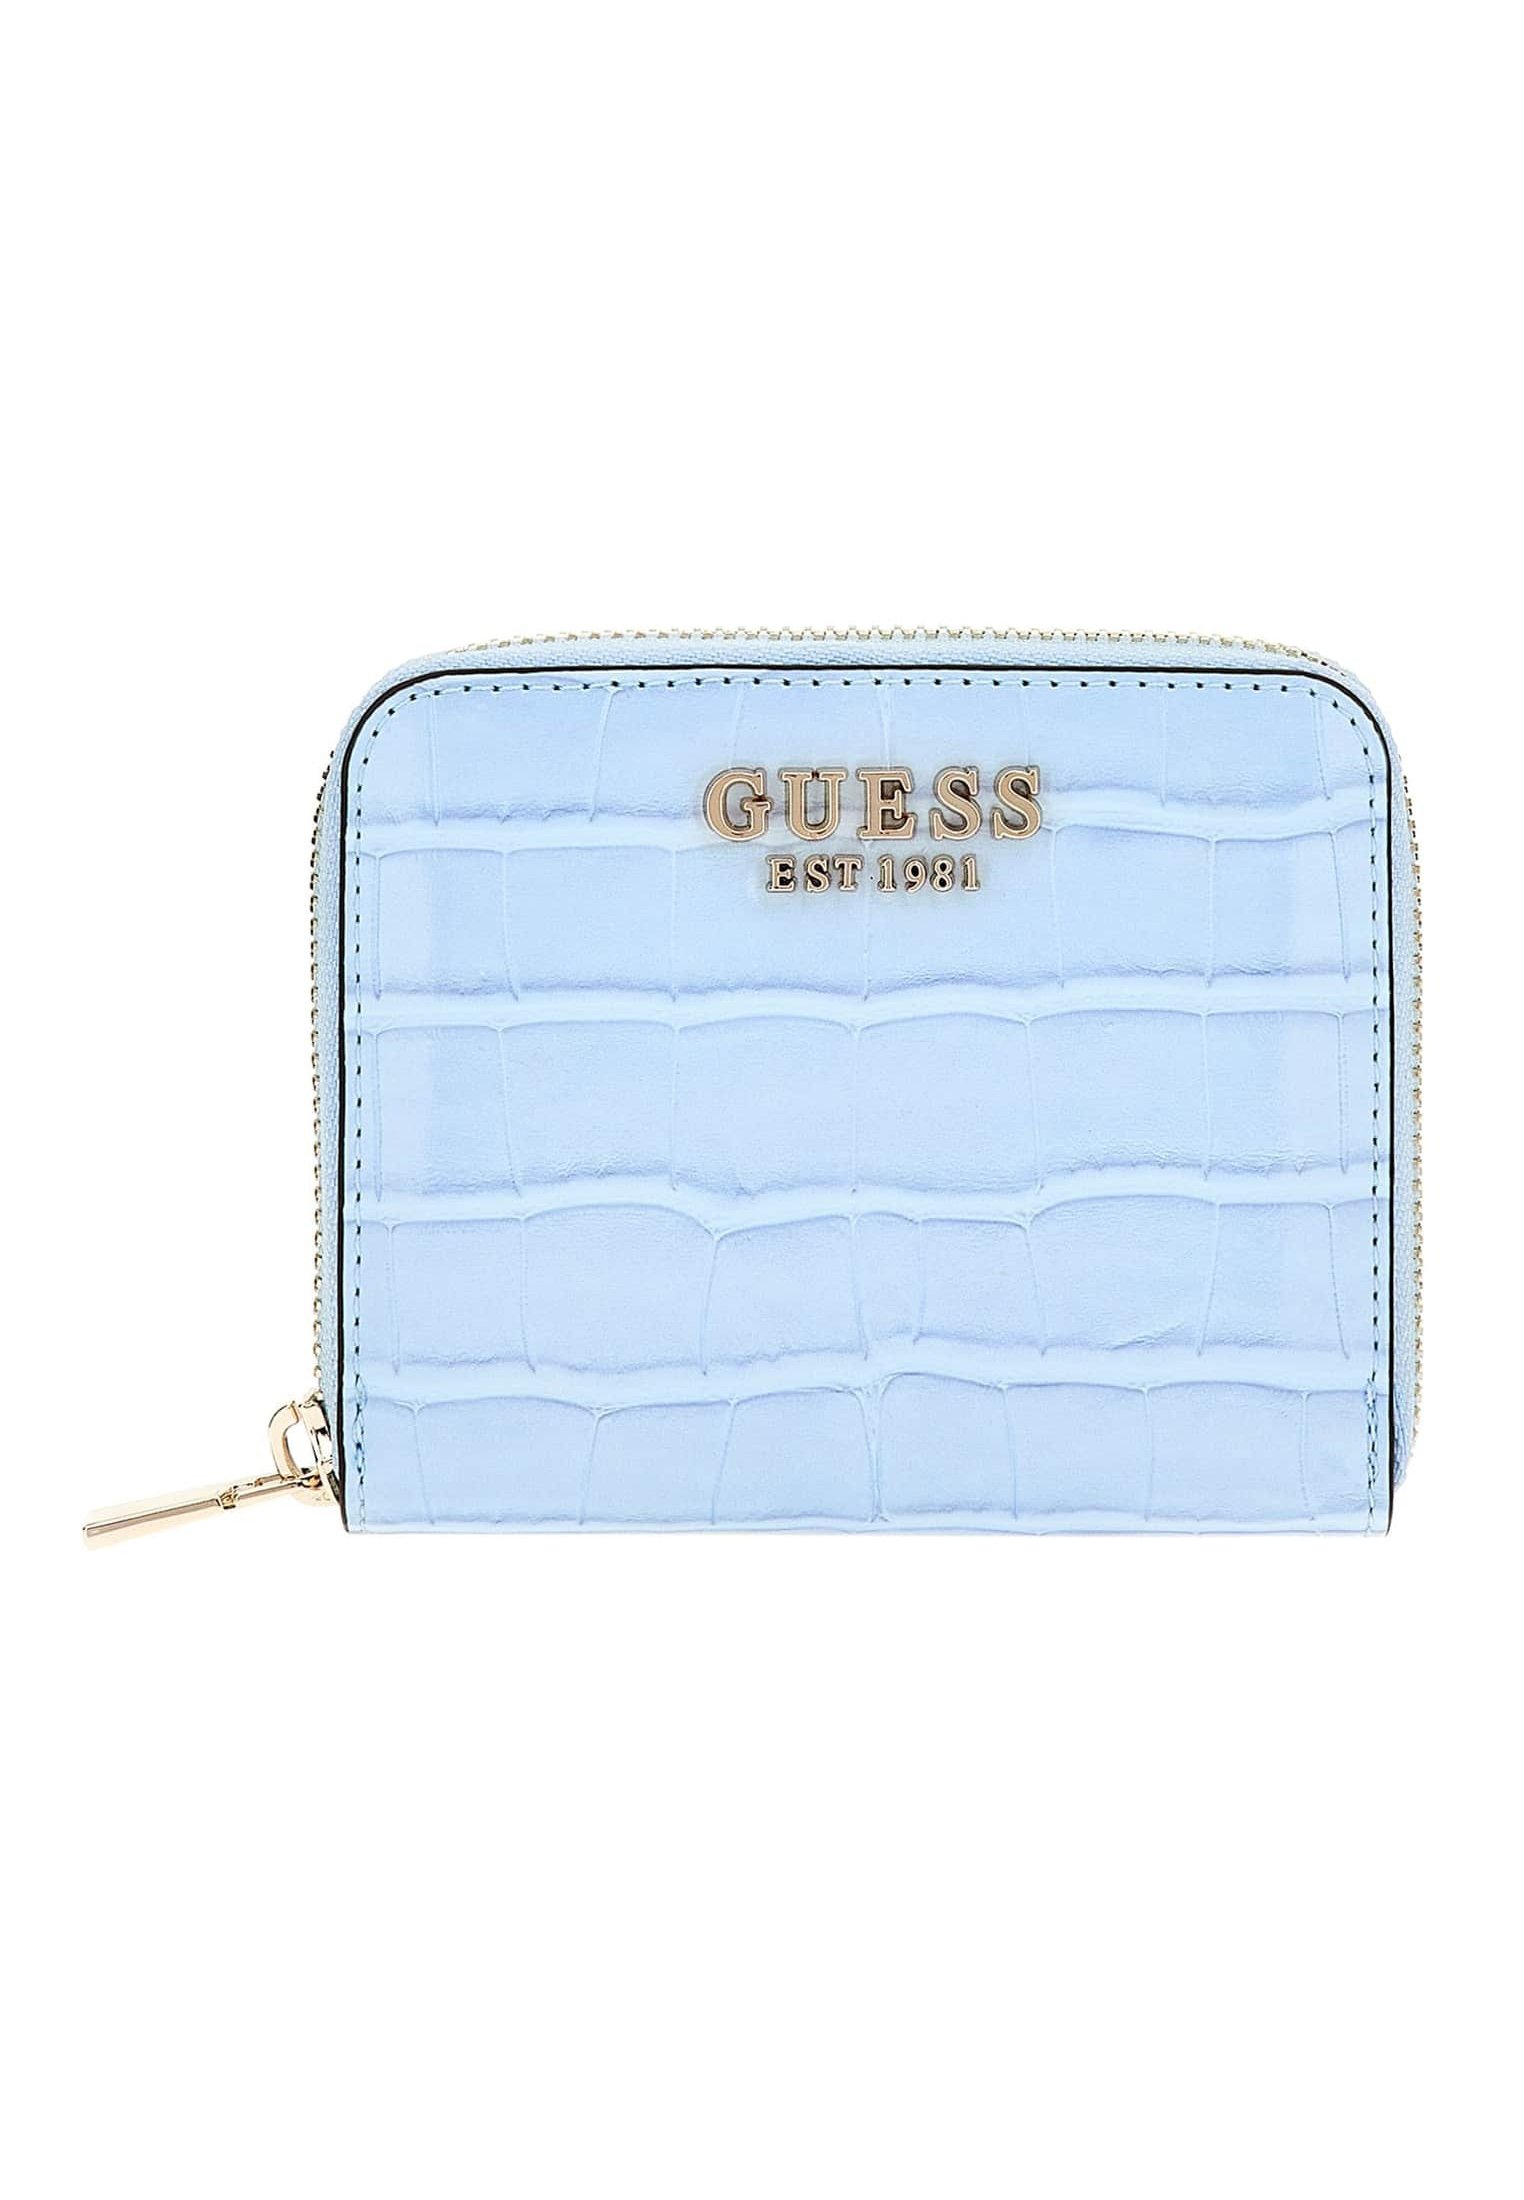 Stylish Guess Blue Signature Bag with Adjustable Shoulder Strap